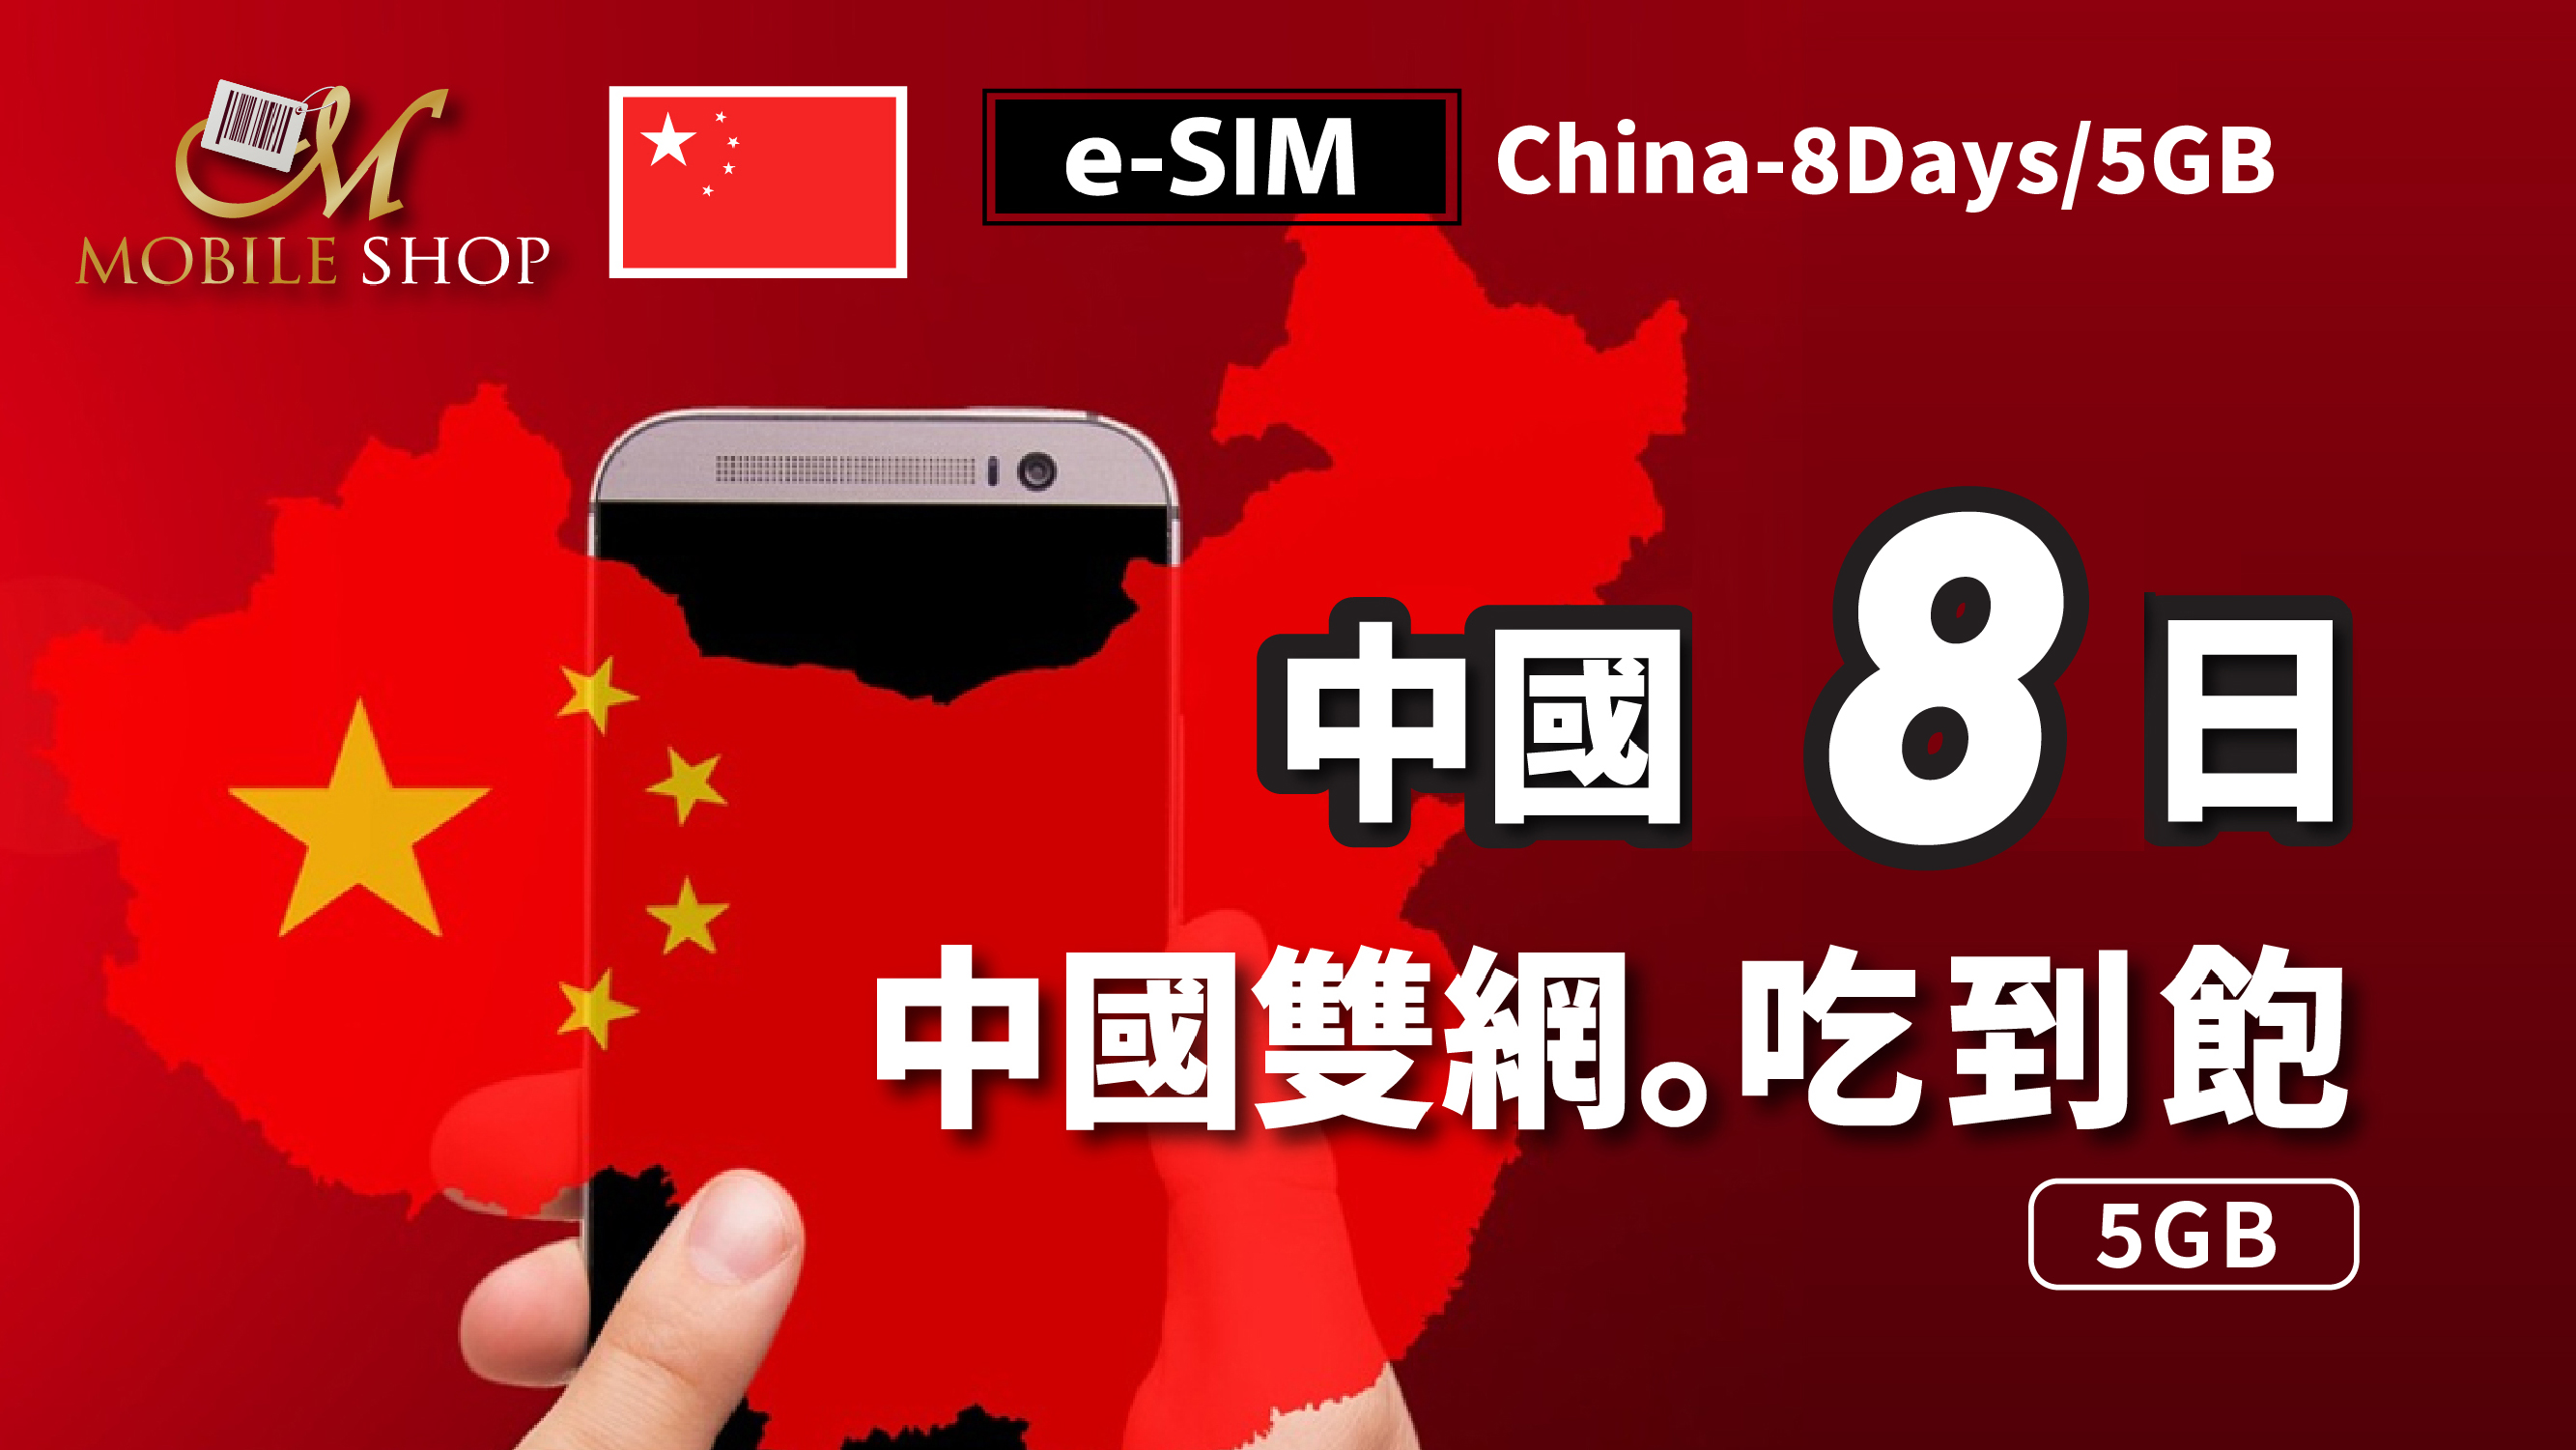 eSIM_China 8Days/5GB unlimited data